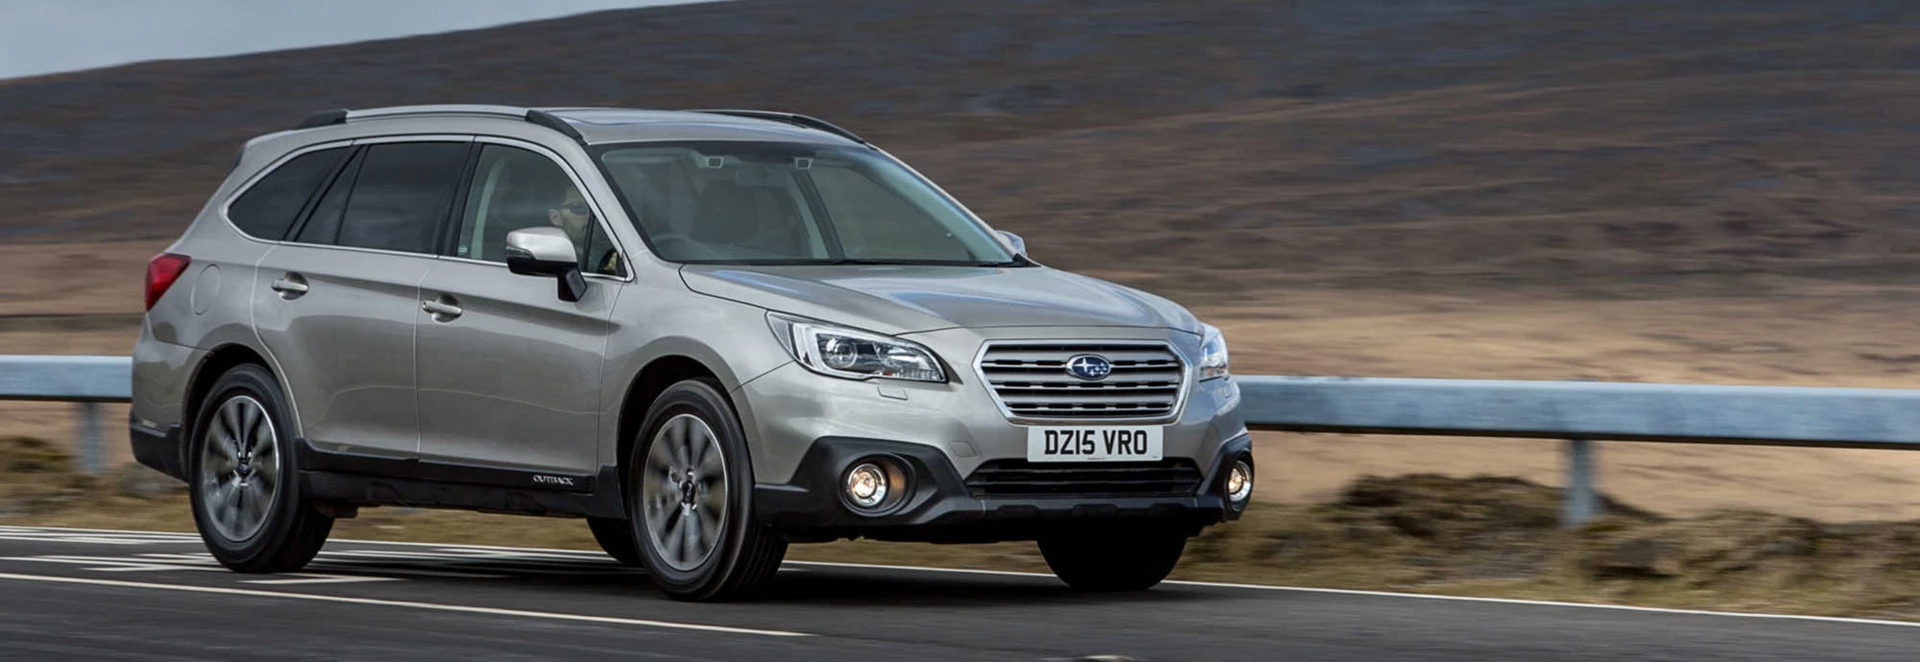 Subaru Outback 2.0D SE Premium Lineartronic review 